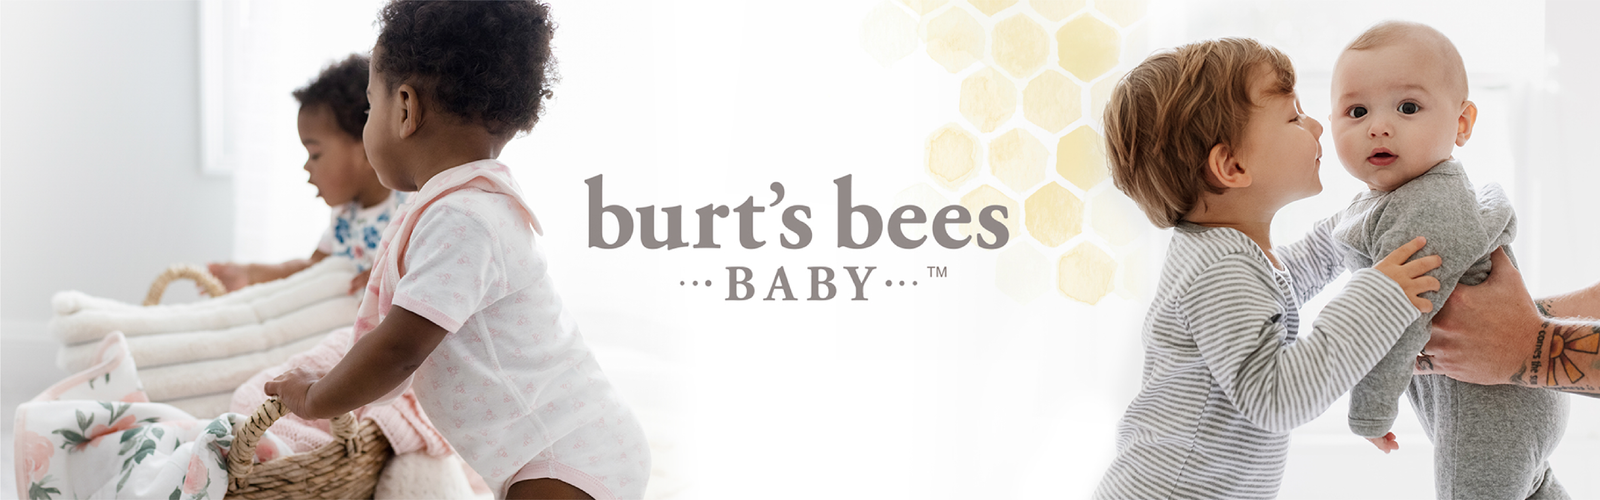 Burt's Bees Baby Clothes